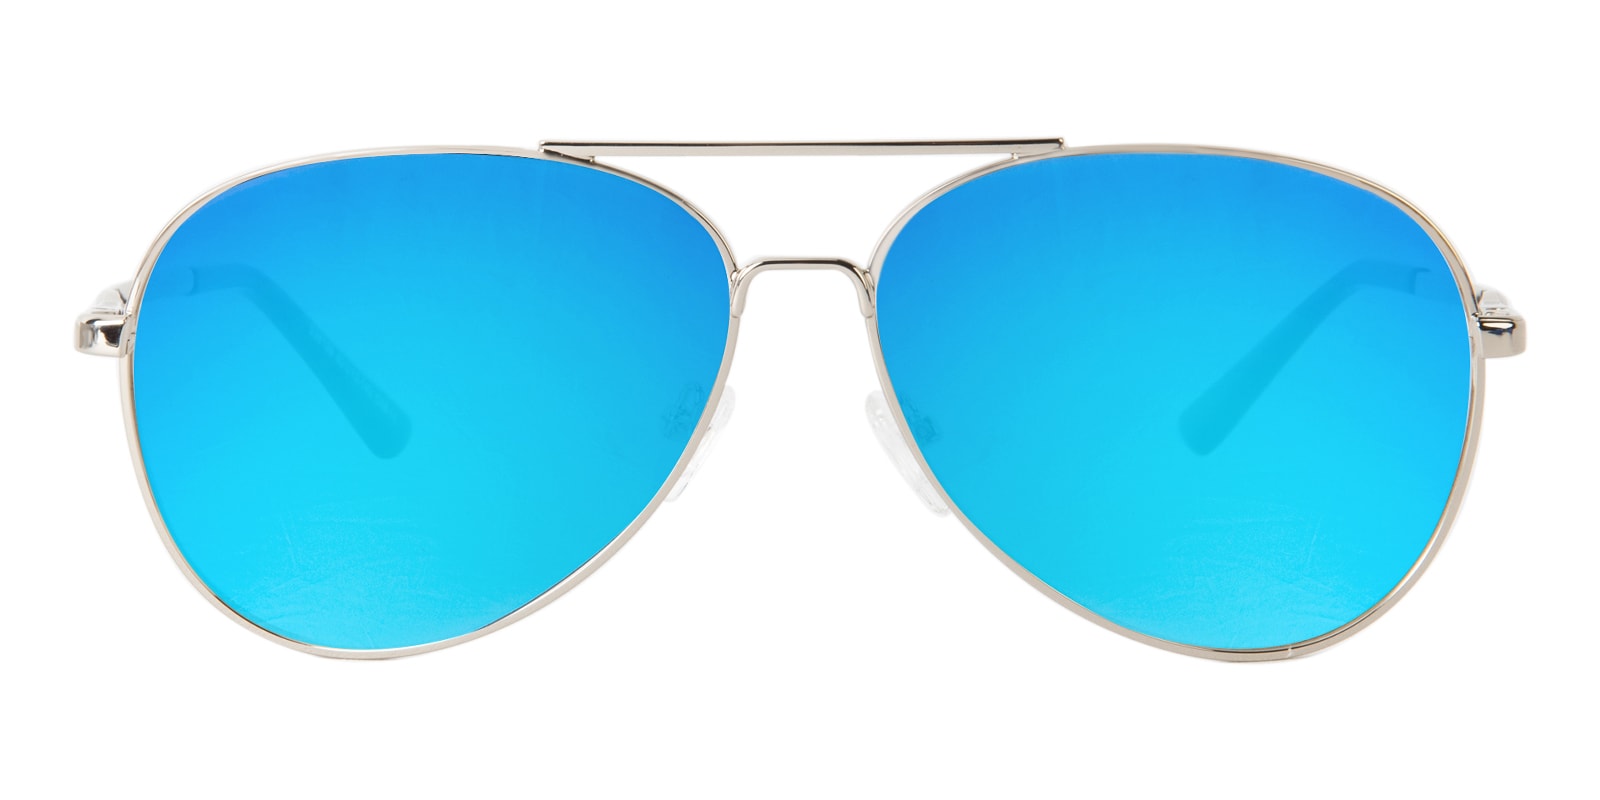 Buy KOSCH ELEMENTE Blue - Aviator Shape Sunglasses - Kst 22823 online